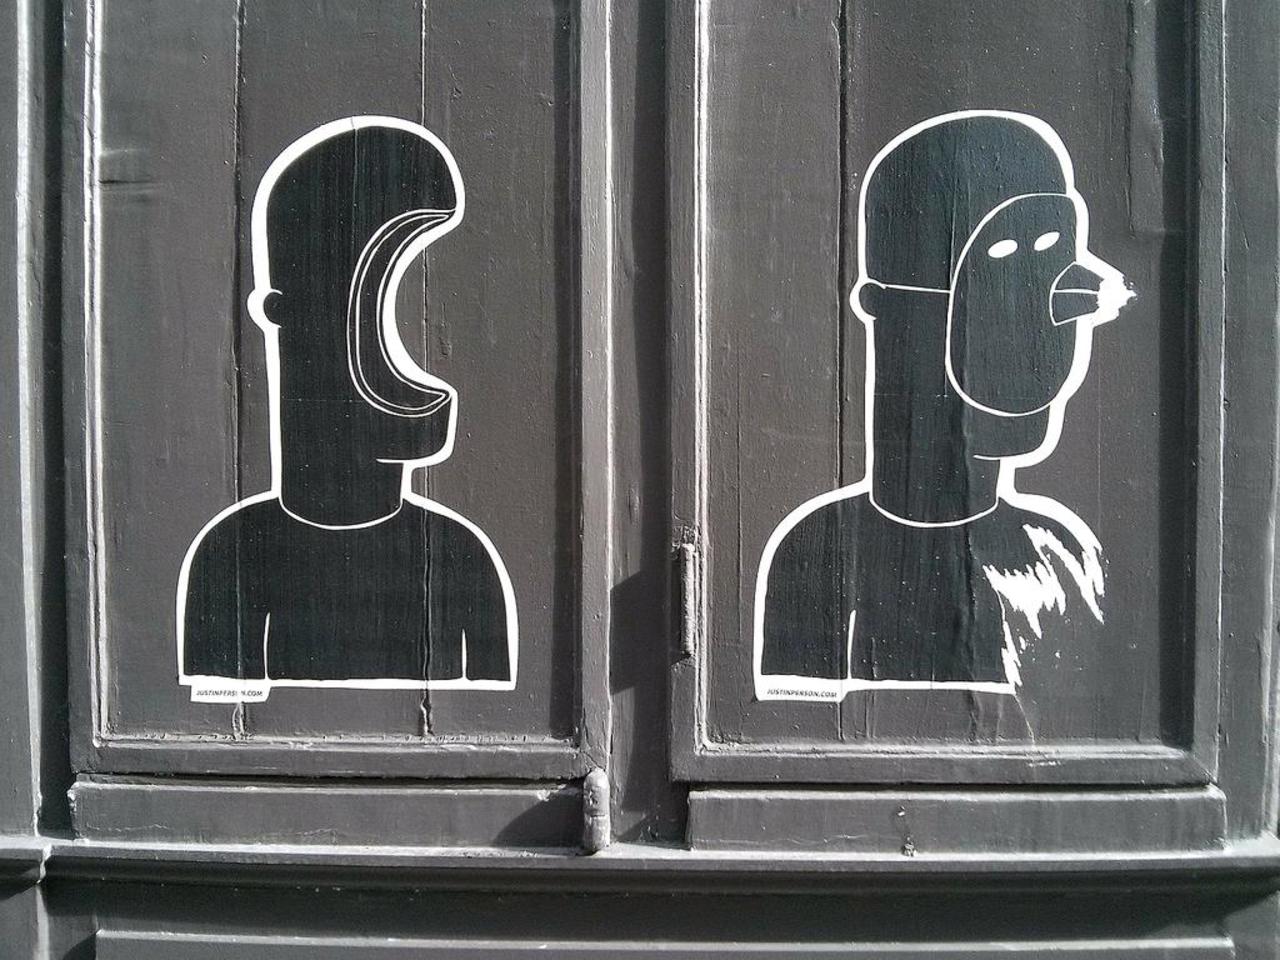 RT @urbacolors: Street Art by Justin Person in #Paris http://www.urbacolors.com #art #mural #graffiti #streetart http://t.co/8AENzLjeTg